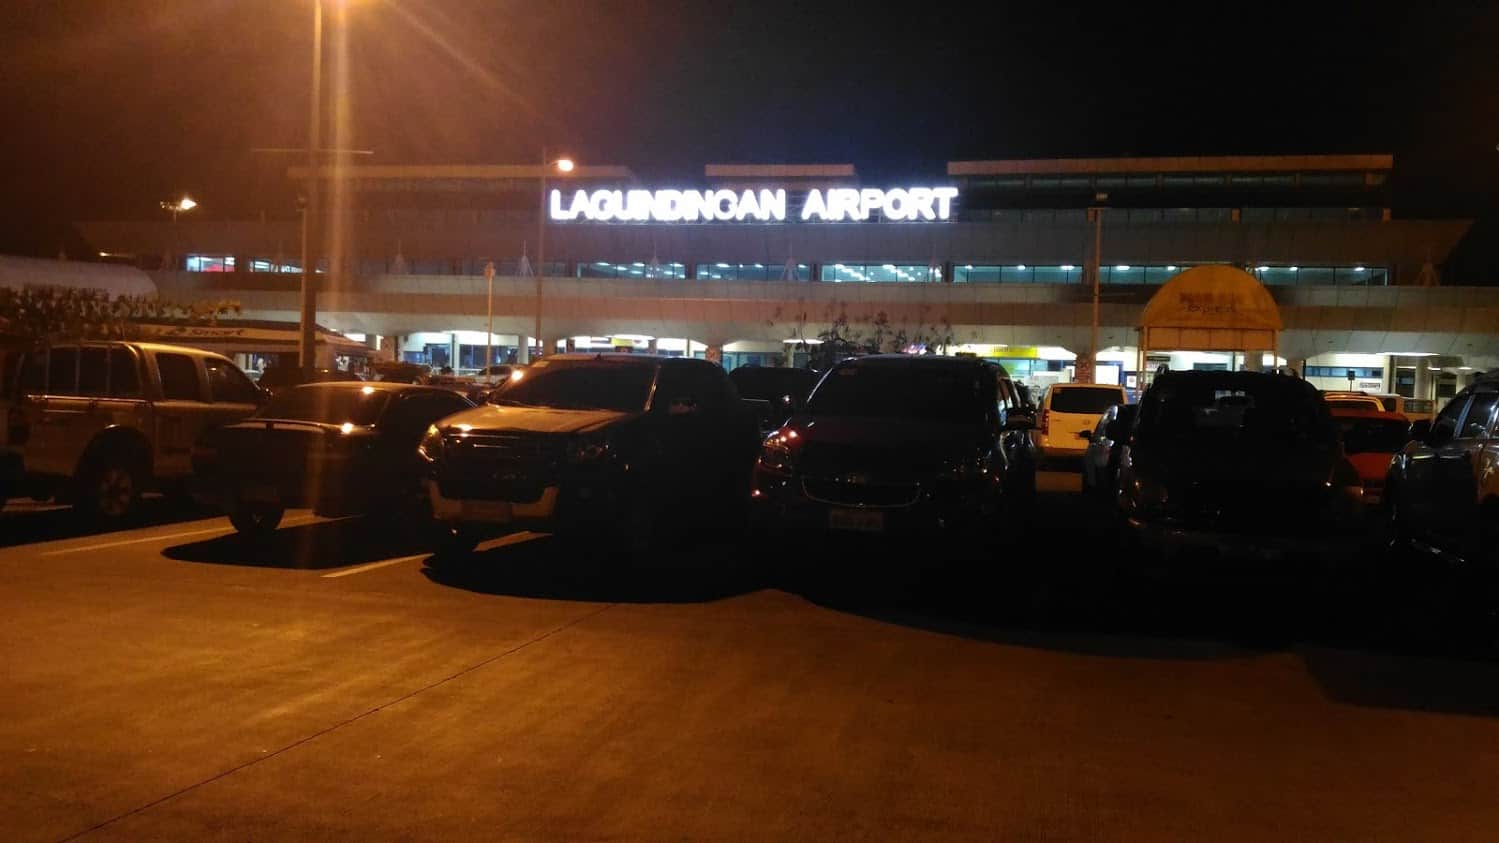 laguindingan international airport location